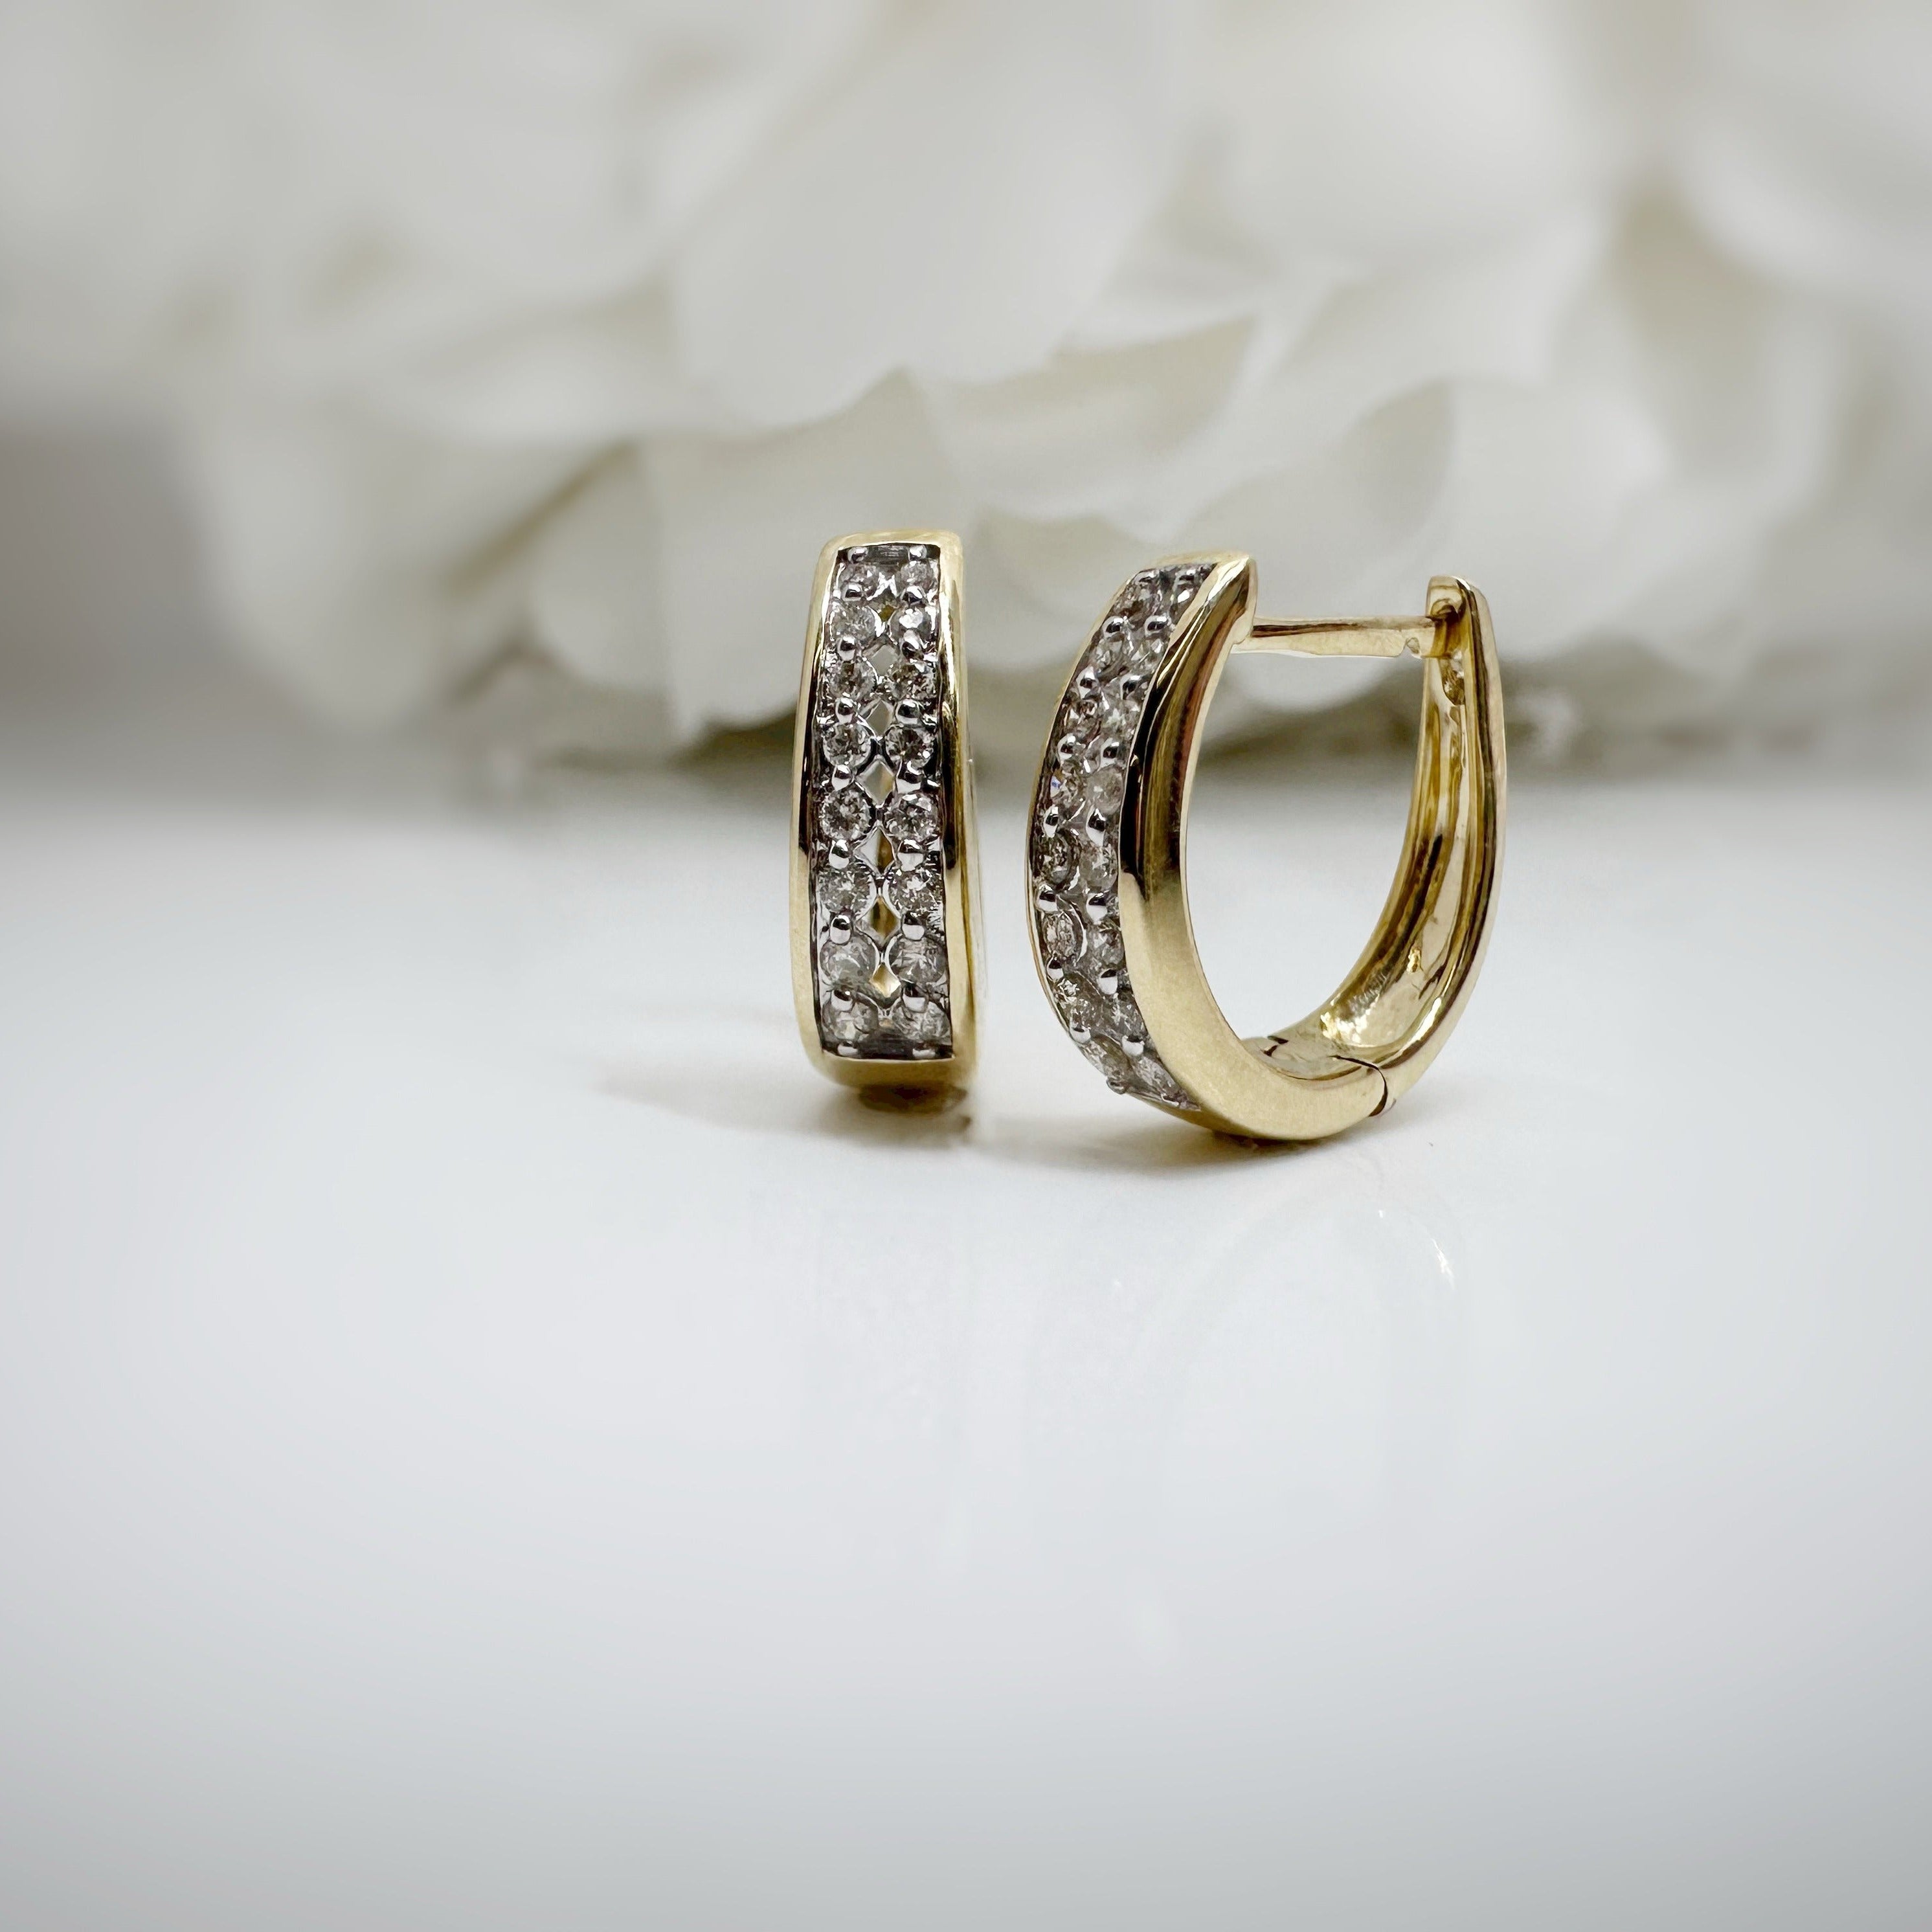 10k yellow gold double row diamond hinged earrings